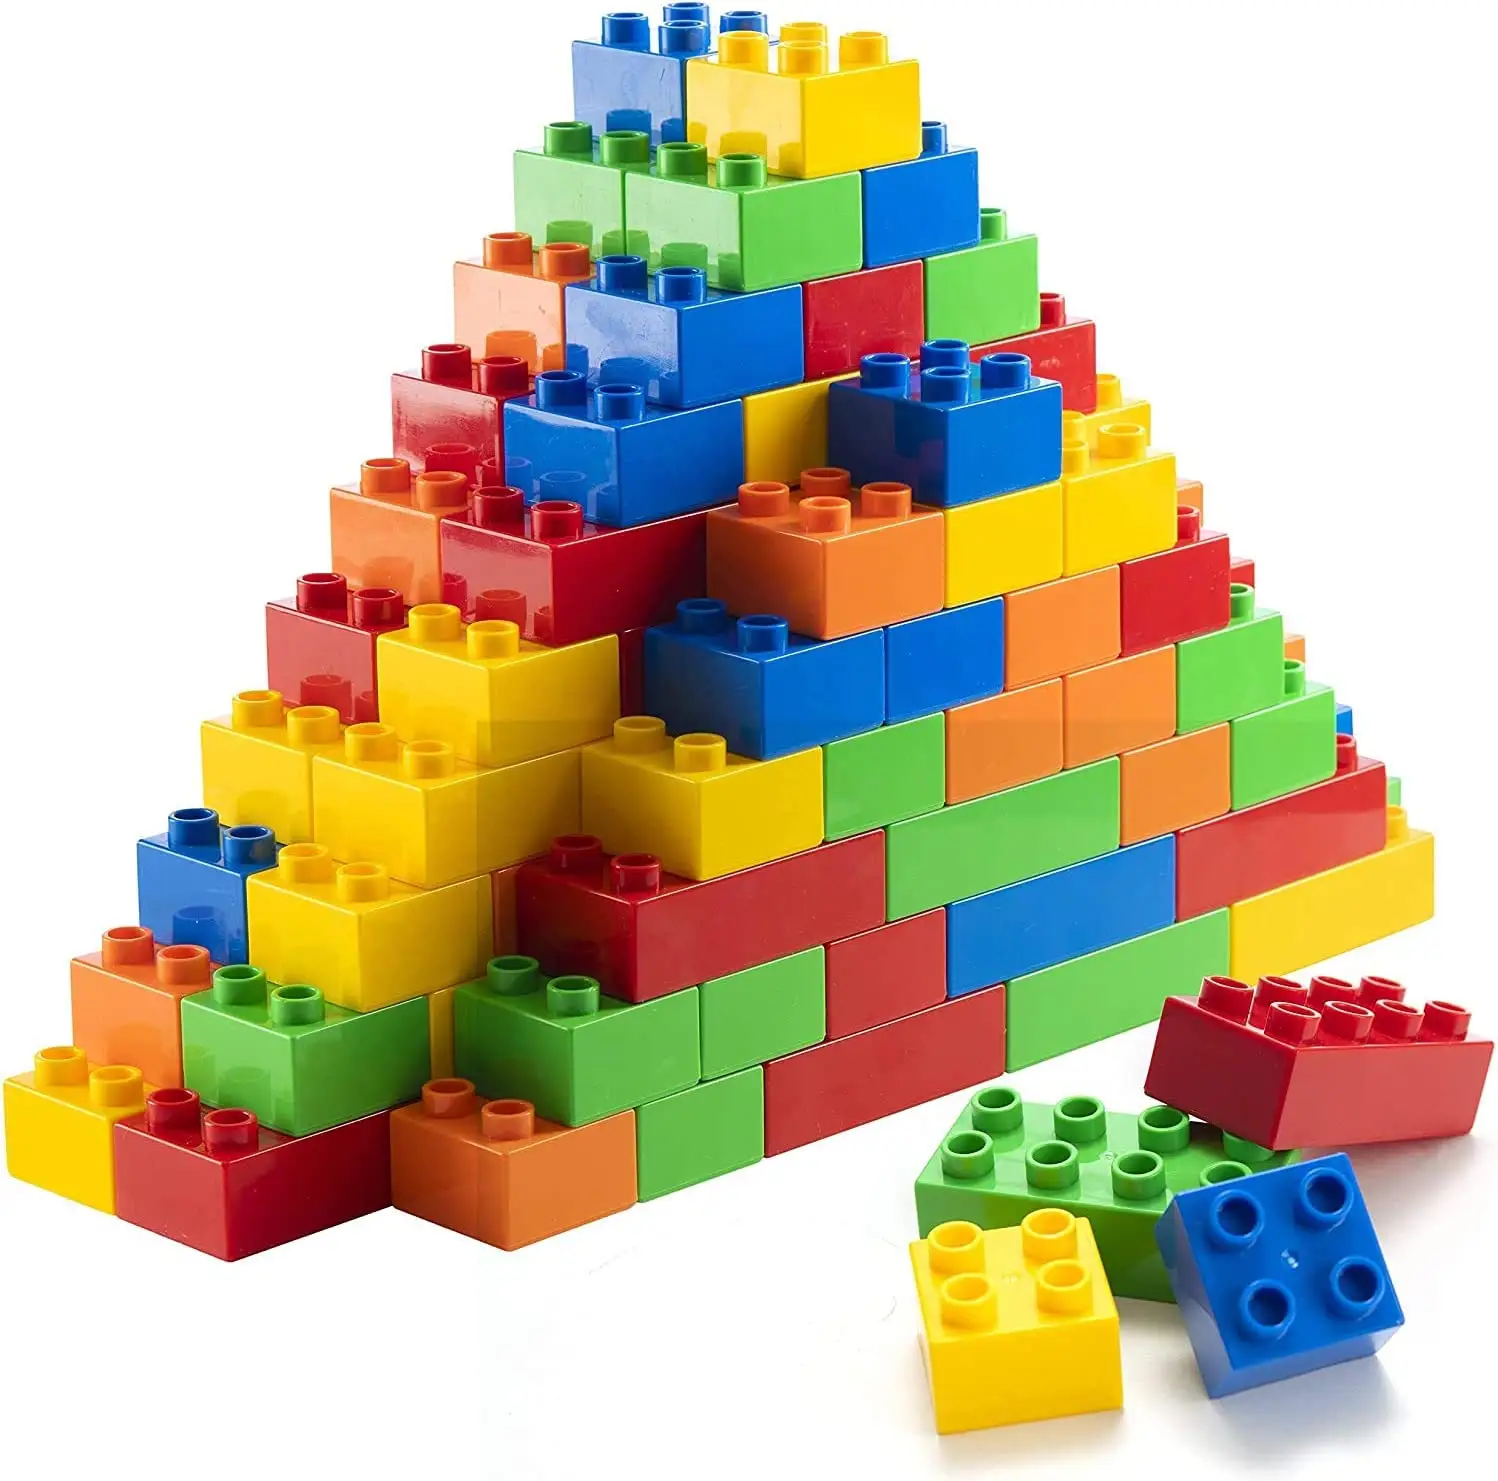 Shantou Factory OEM ODM Building Blocks for Toddlers 2-8 (150 Mega Blocks) Large Toy Blocks Compatible with all Major Brands